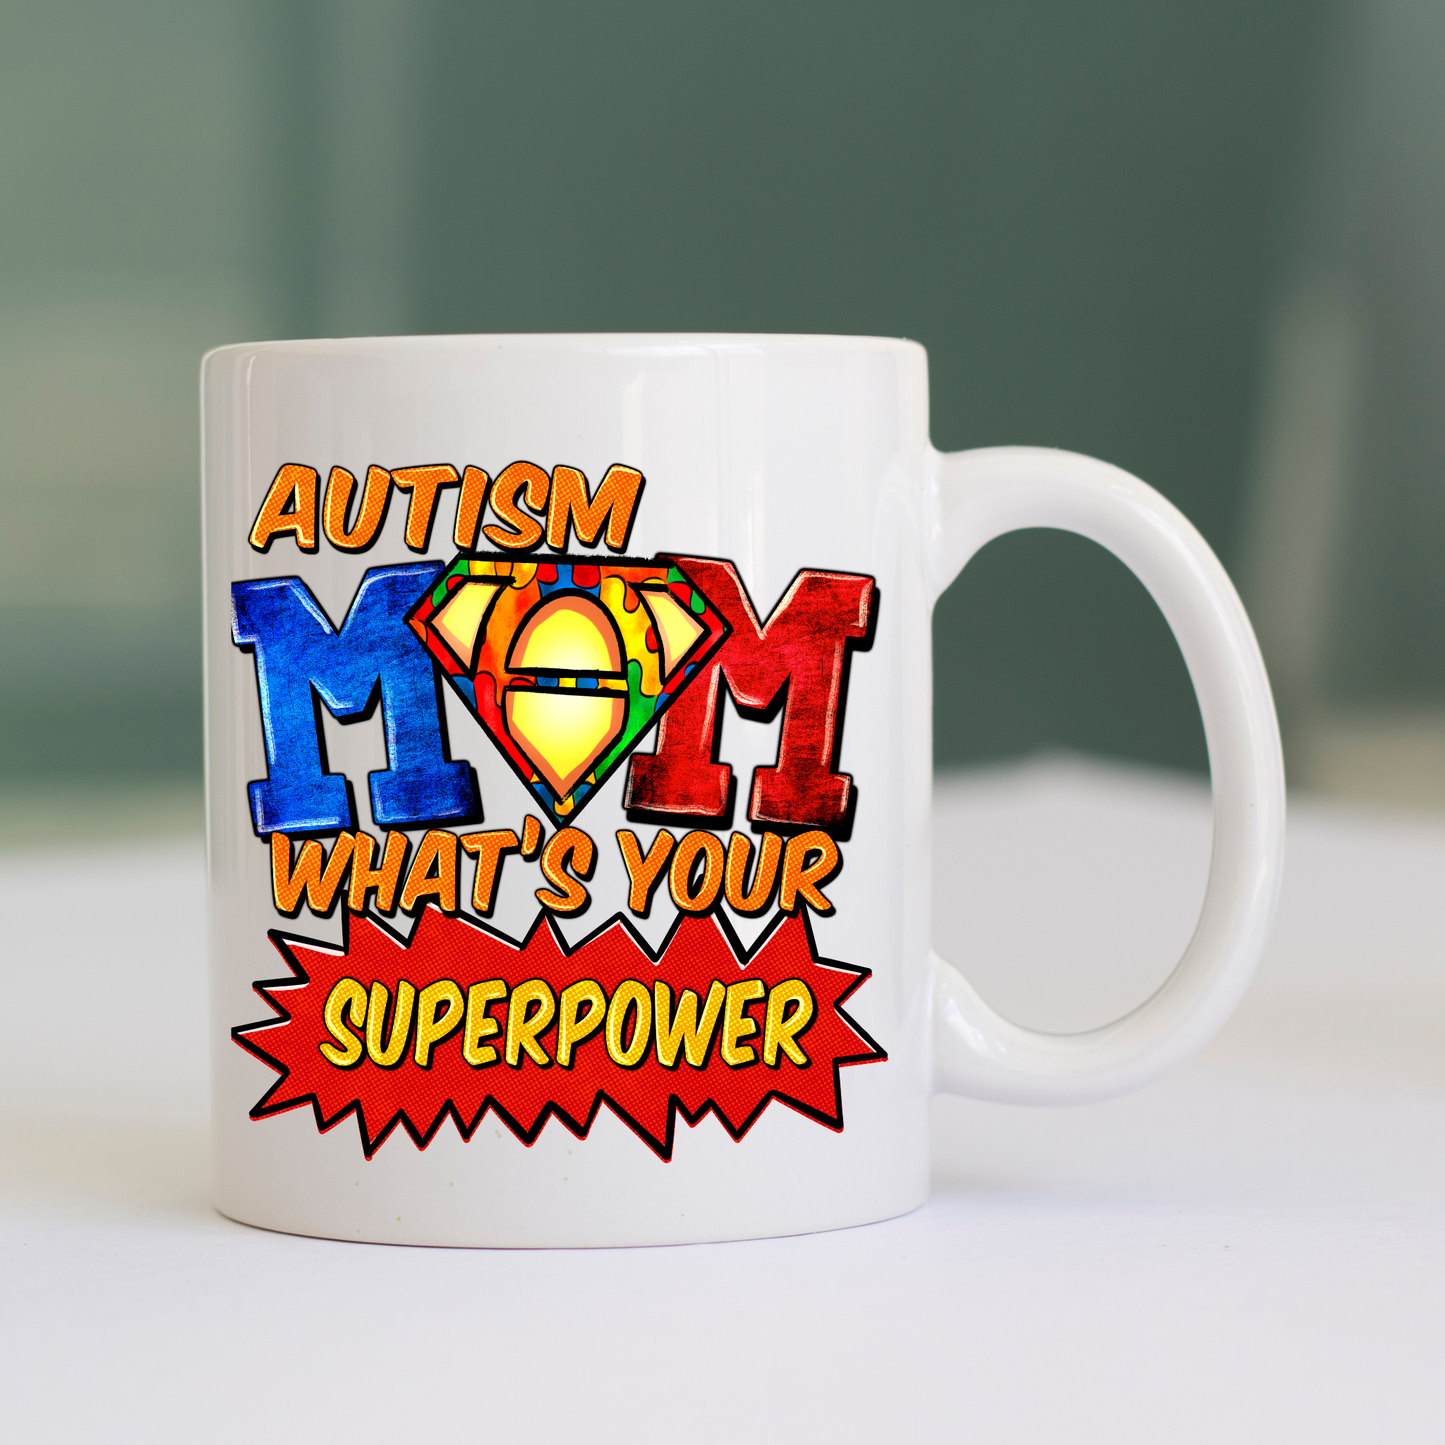 AUTISM MOM mug